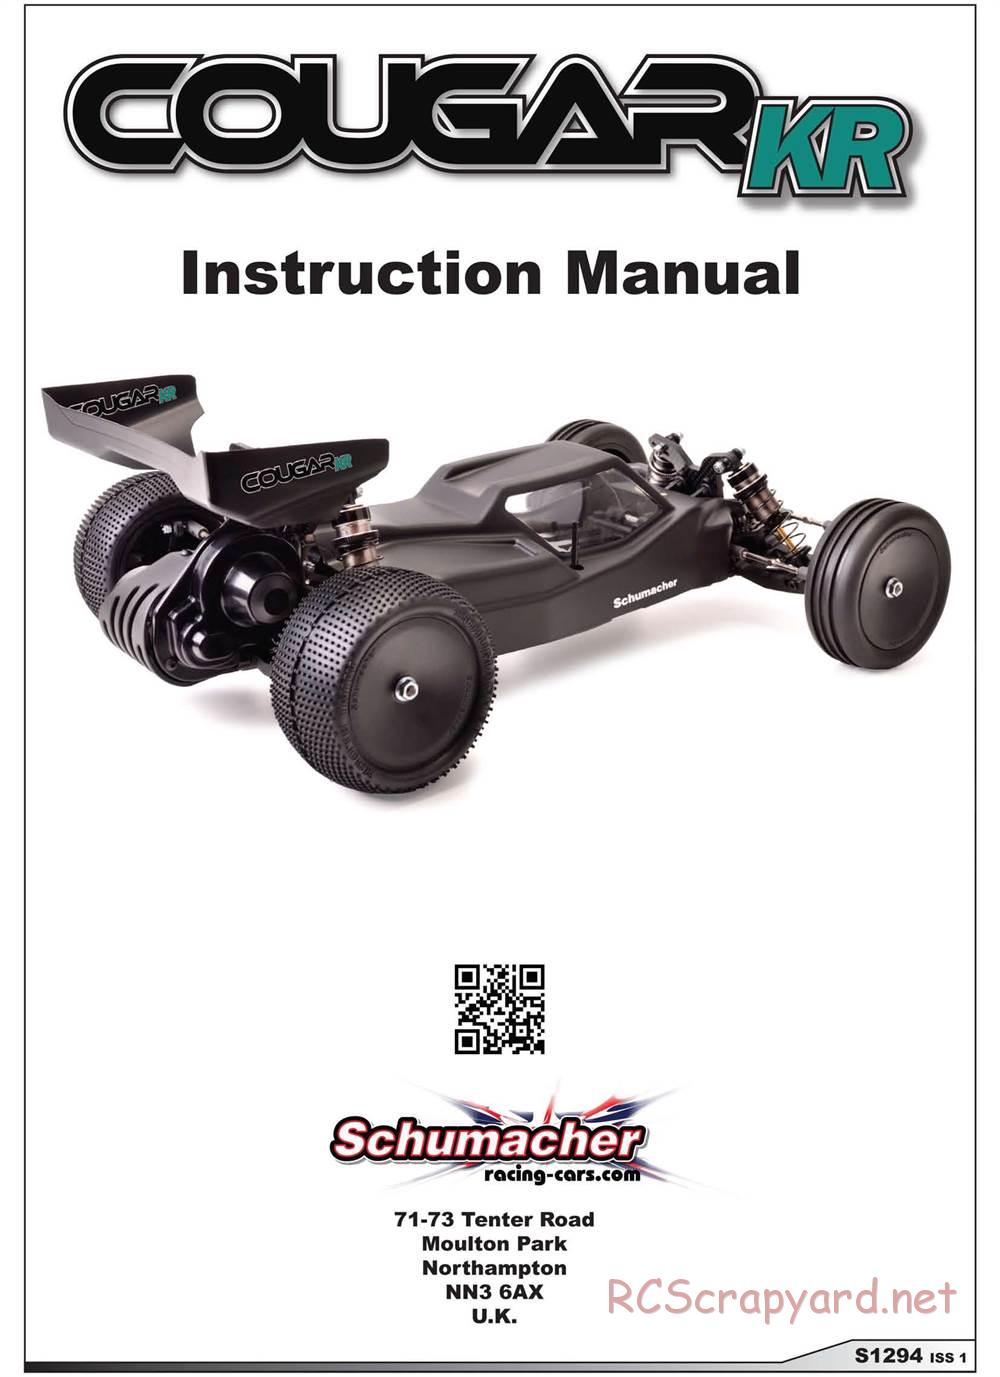 Schumacher - Cougar KR - Manual - Page 1